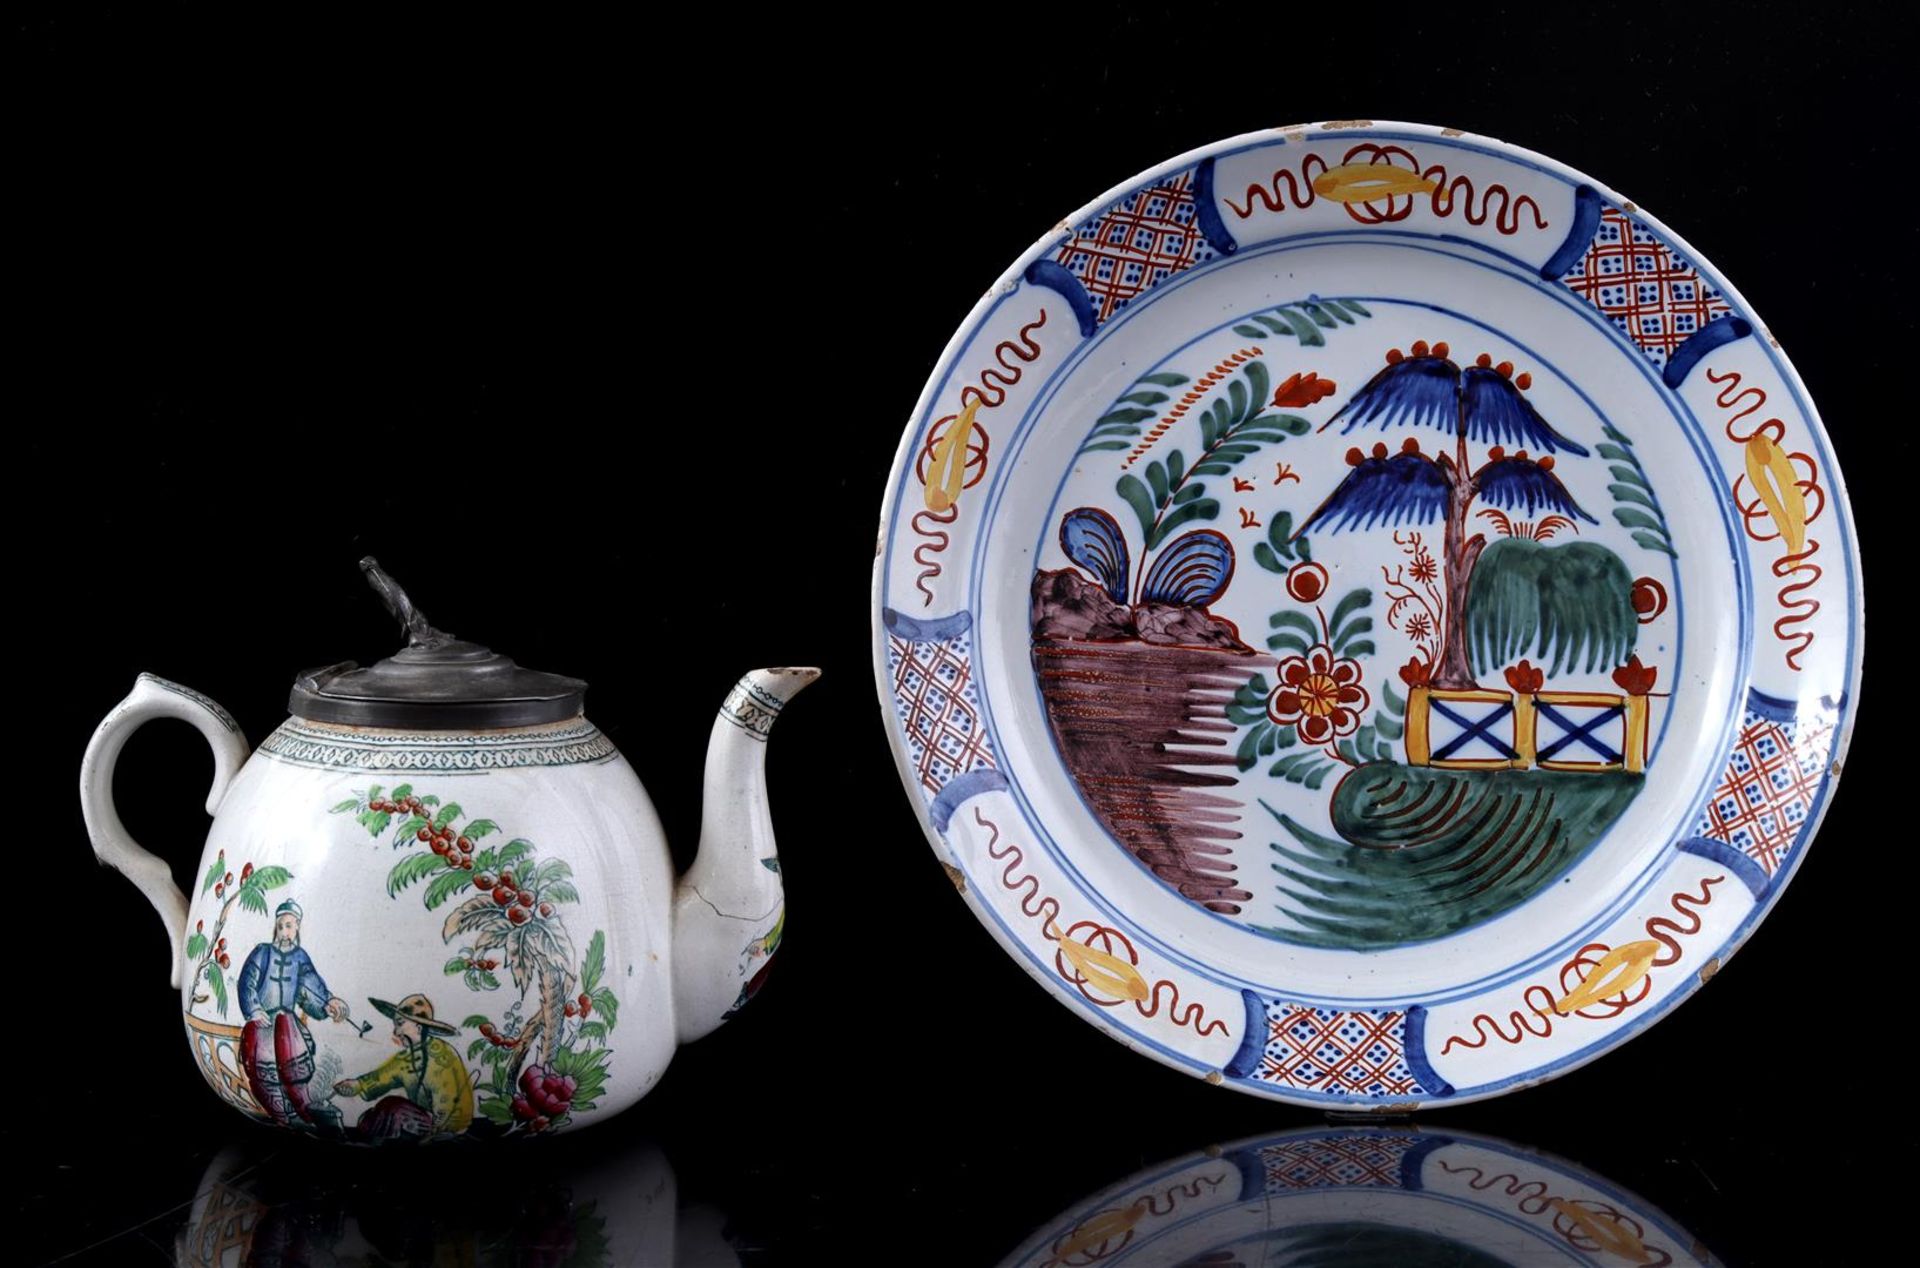 Earthenware teapot and Delft earthenware saucer